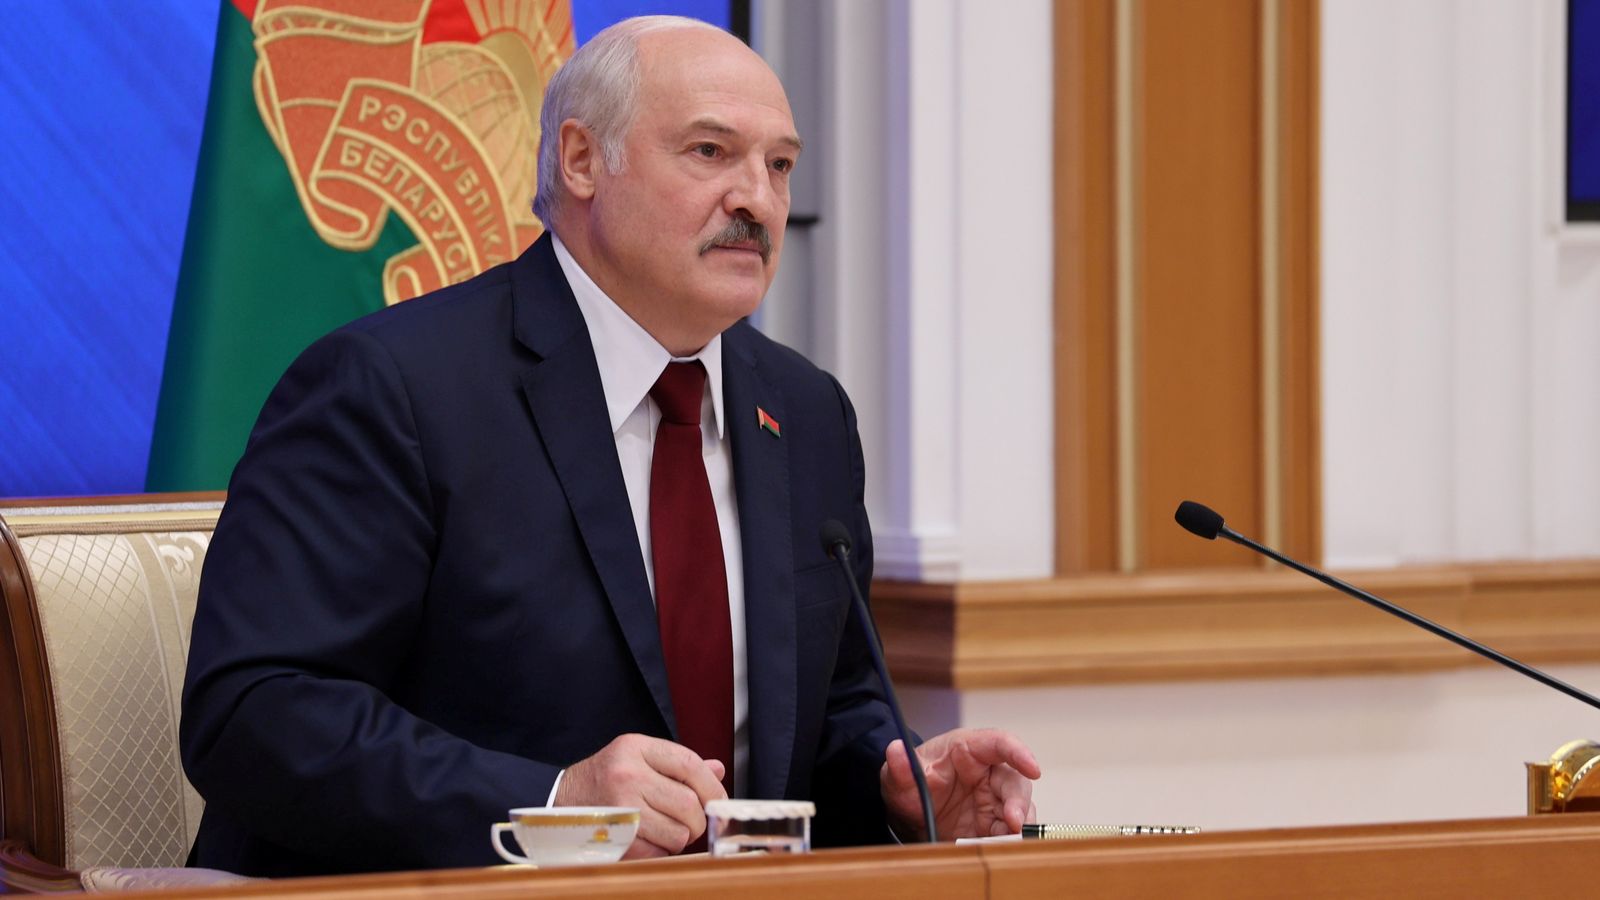 Britain imposes new sanctions on Belarus – but President Lukashenko tells London to ‘choke on them’